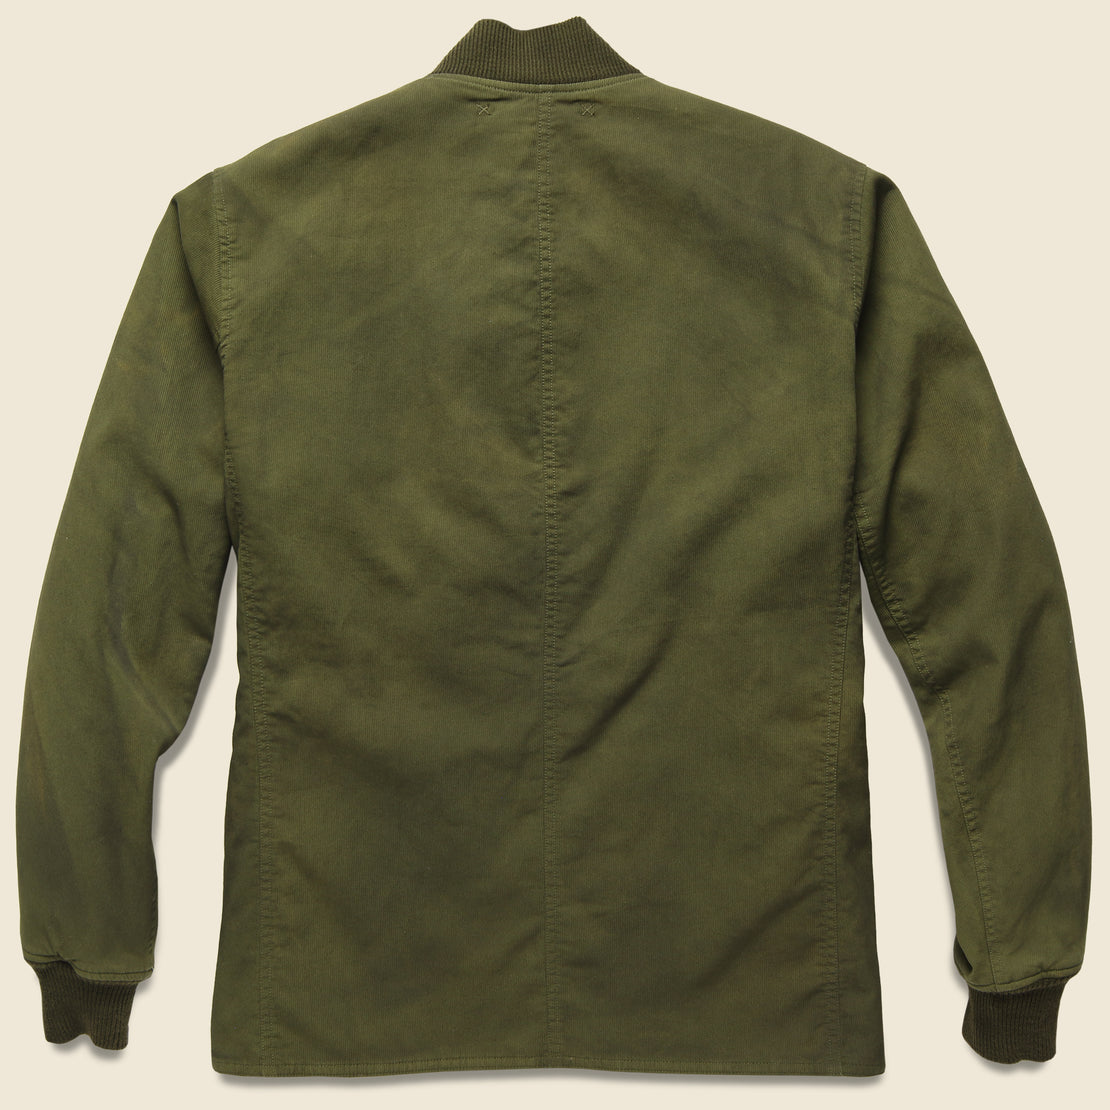 Stuart Jungle Cloth Jacket - Olive - RRL - STAG Provisions - Outerwear - Coat / Jacket